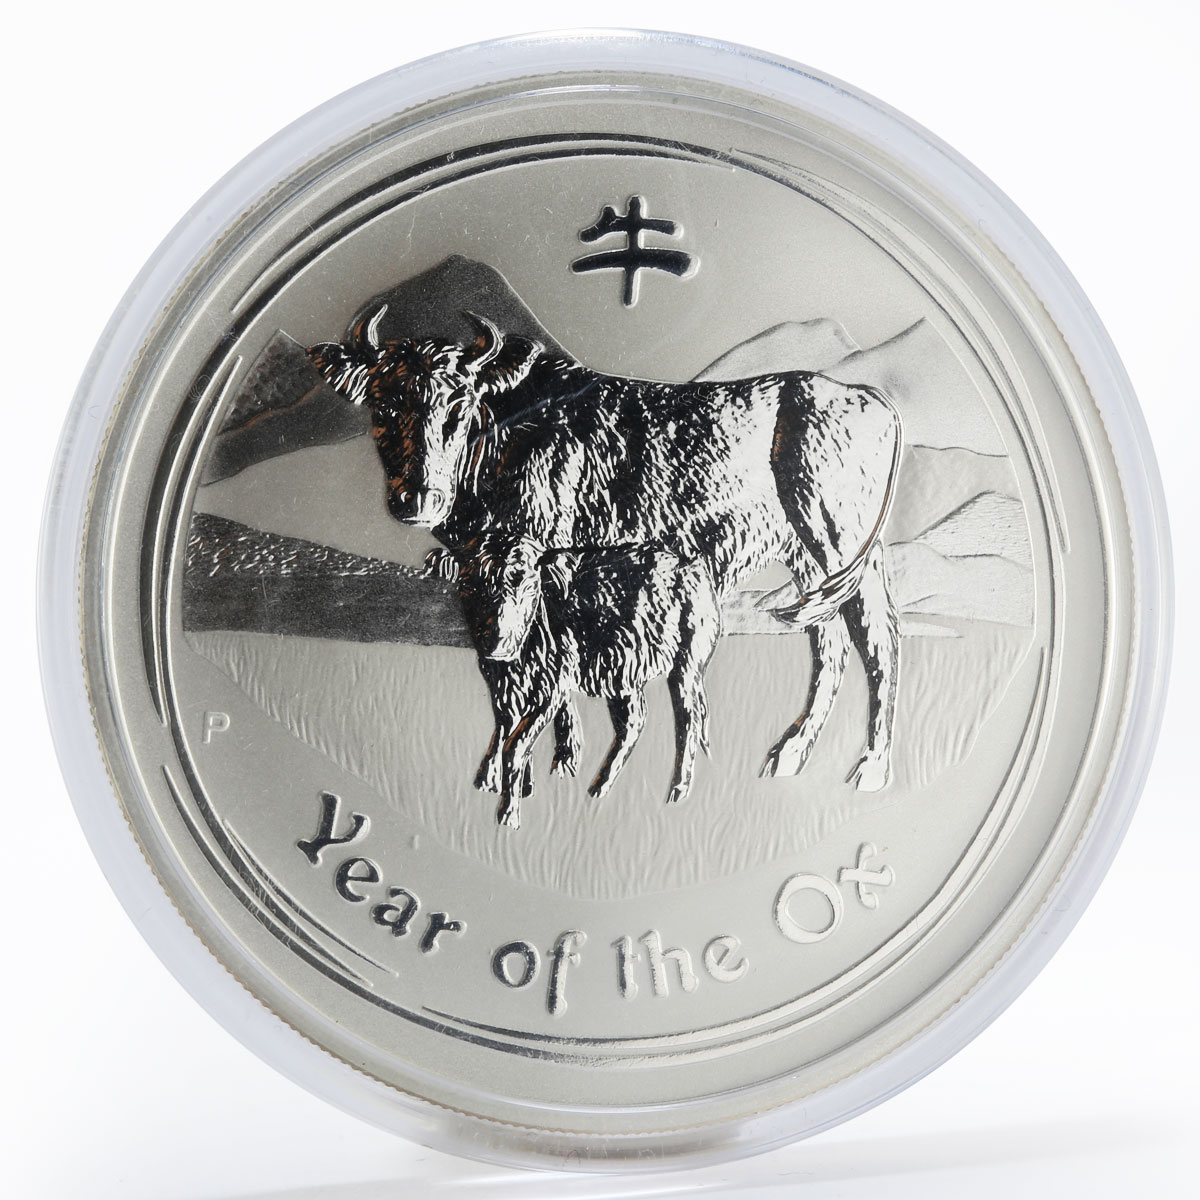 Australia 2 dollars Year of The Ox Lunar Series II silver coin 2009